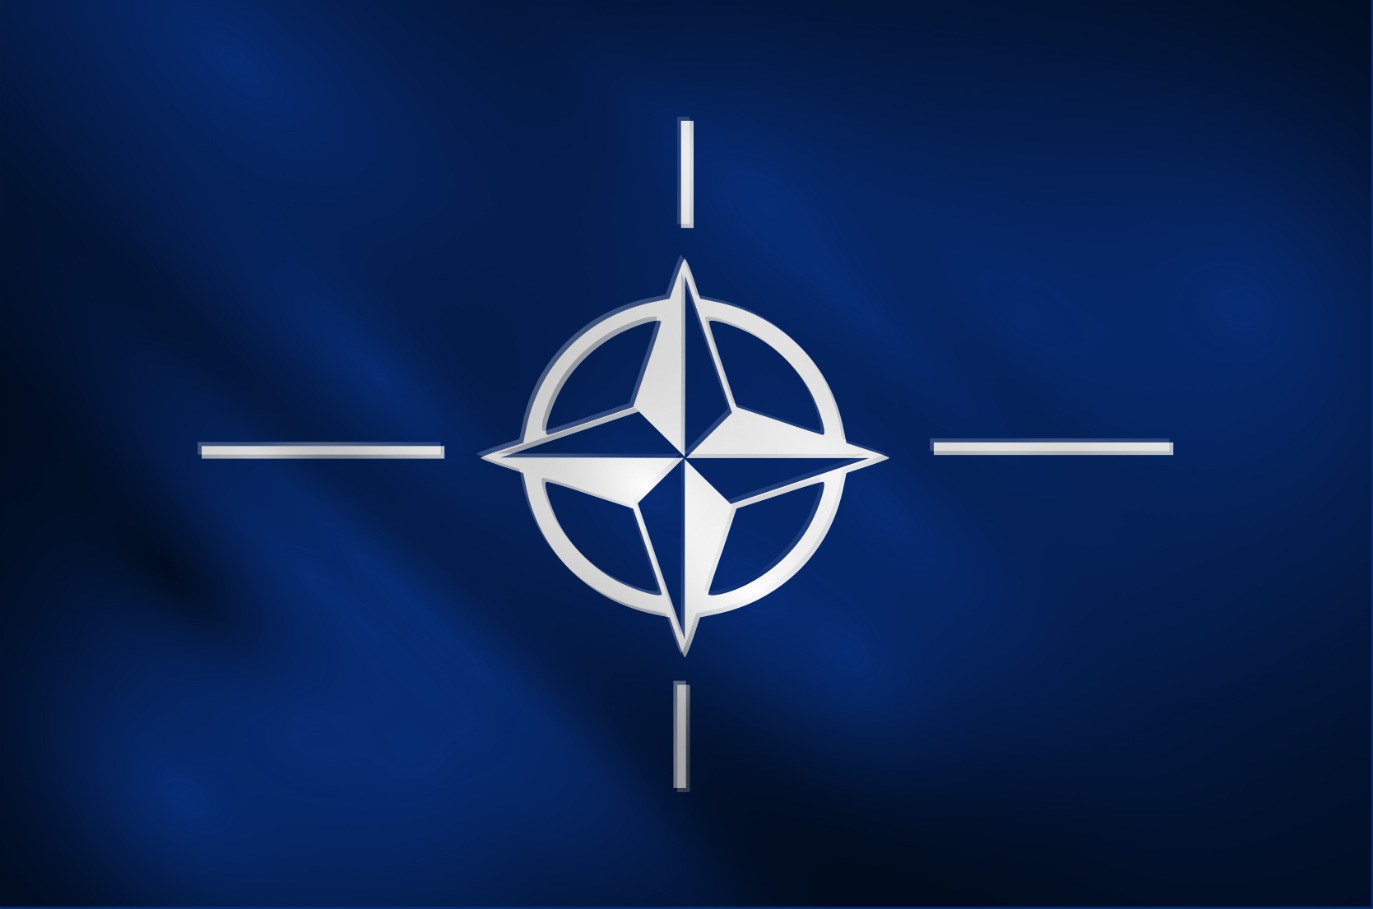 20 let v NATO, stálo to za to?